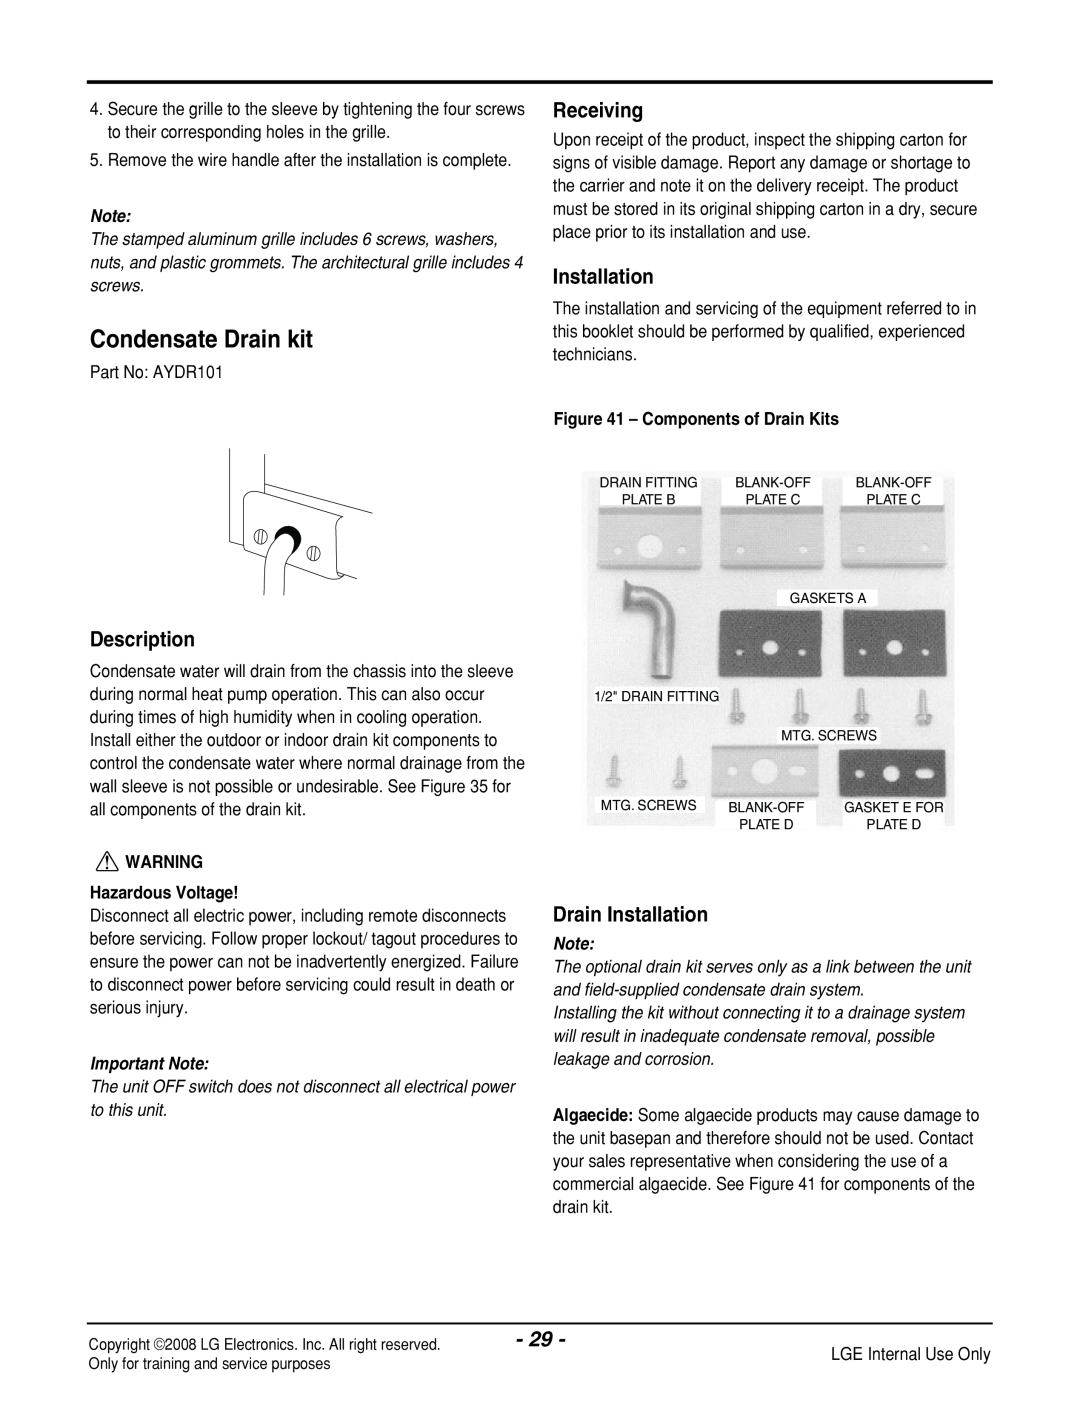 LG Electronics LP121CEM-Y8 Condensate Drain kit, Drain Installation, Receiving, Description, Components of Drain Kits 